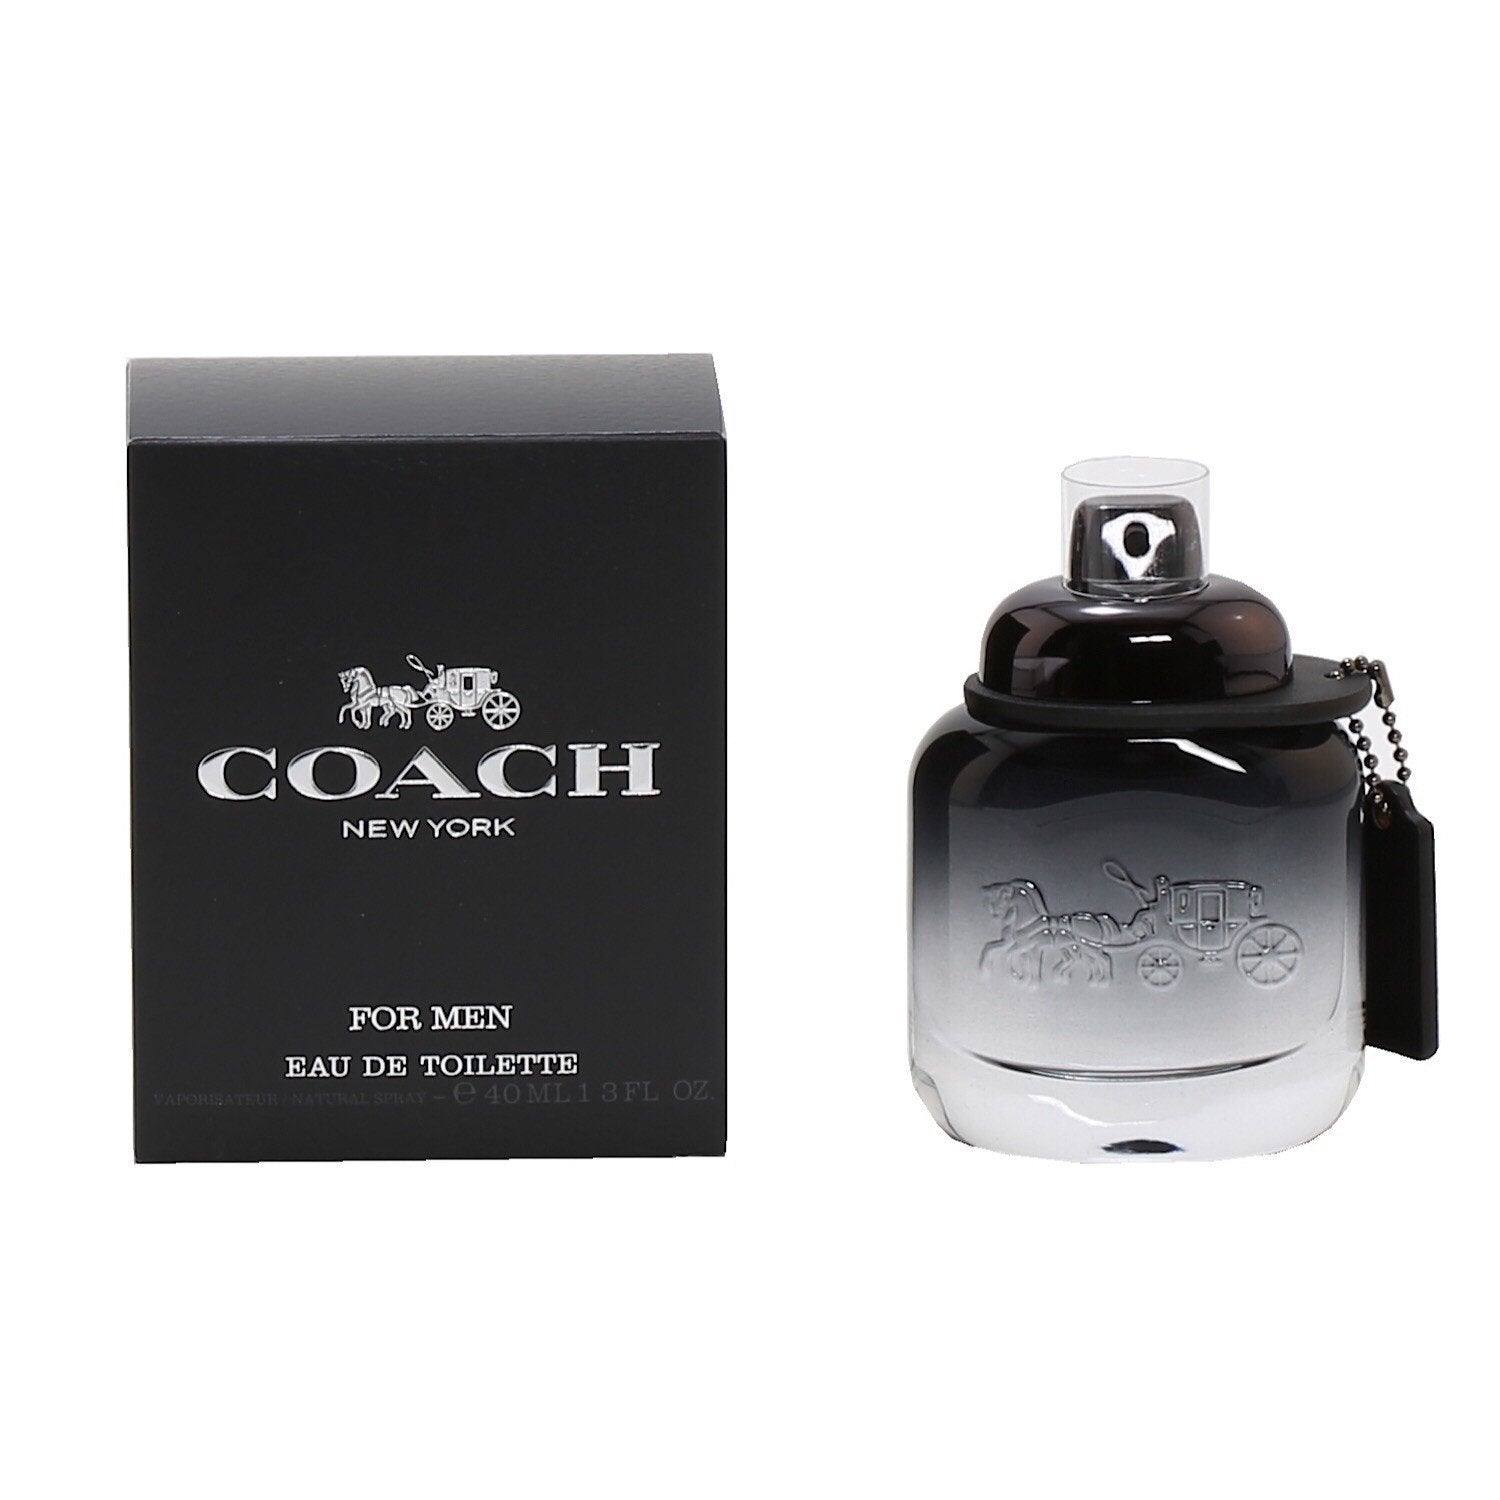 COACH NEW YORK FOR MEN - EAU DE TOILETTE SPRAY, 1.3 OZ – Fragrance